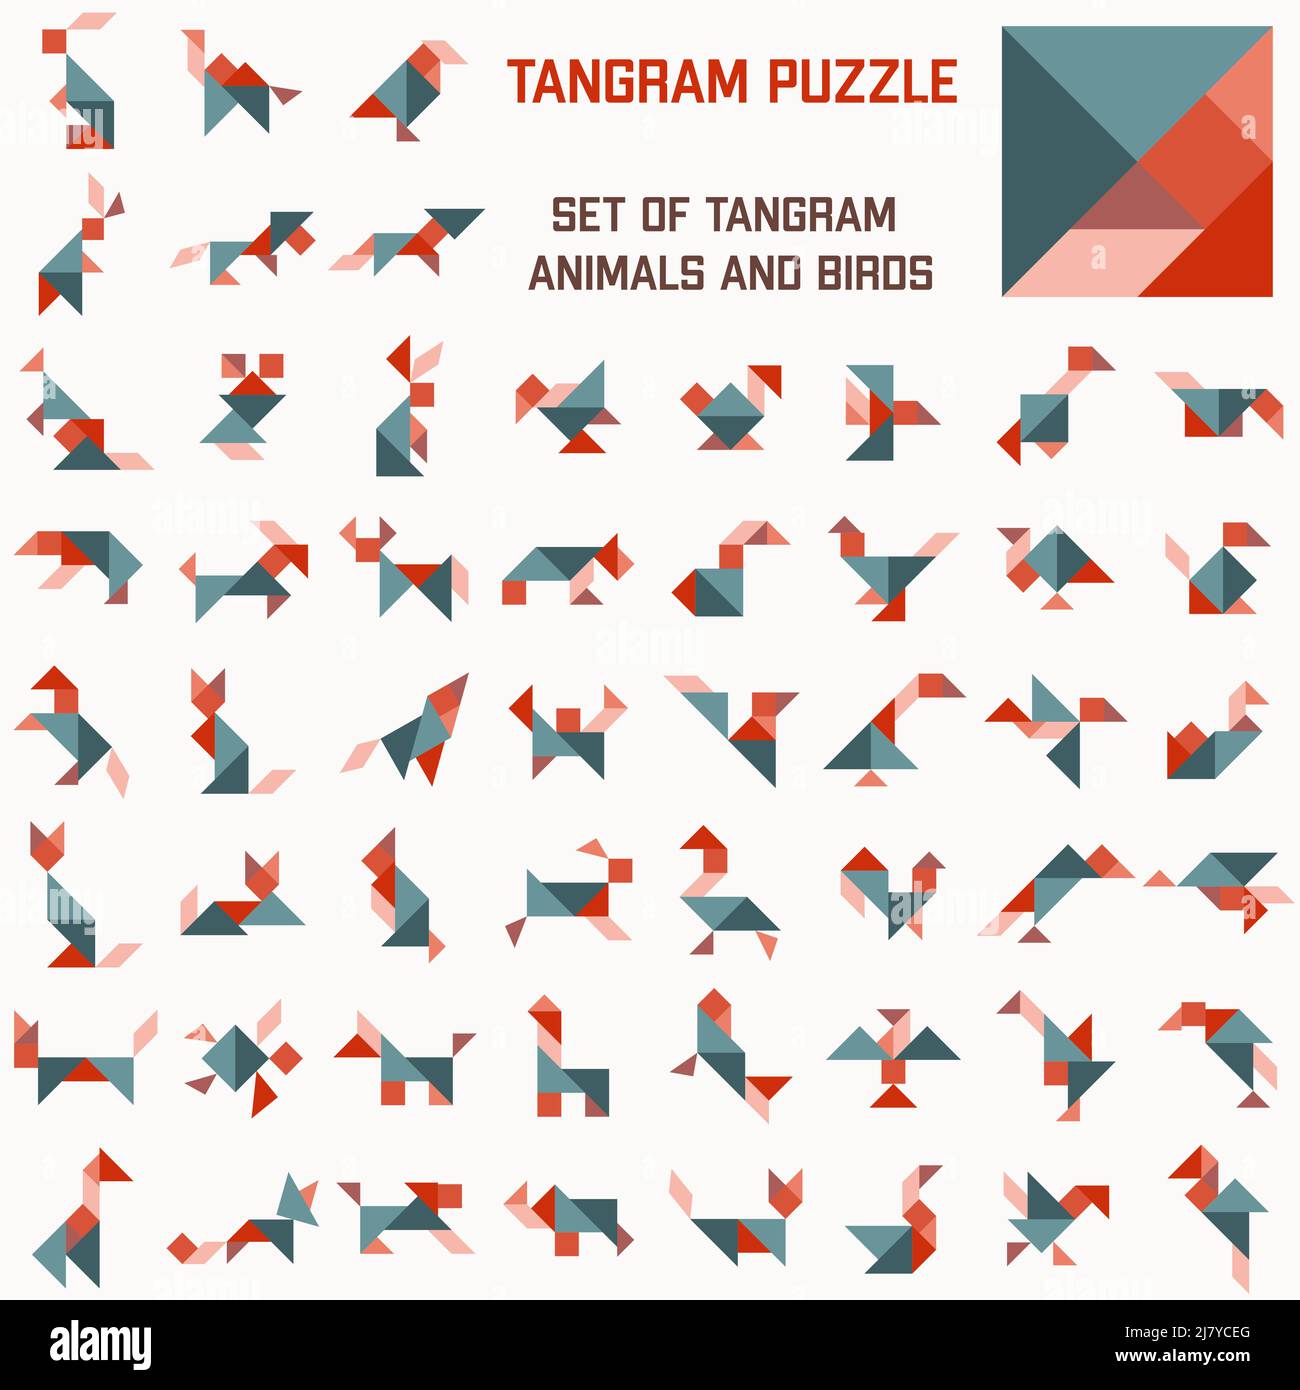 Tangram puzzle. Set of tangram animals and birds  Stock Vector